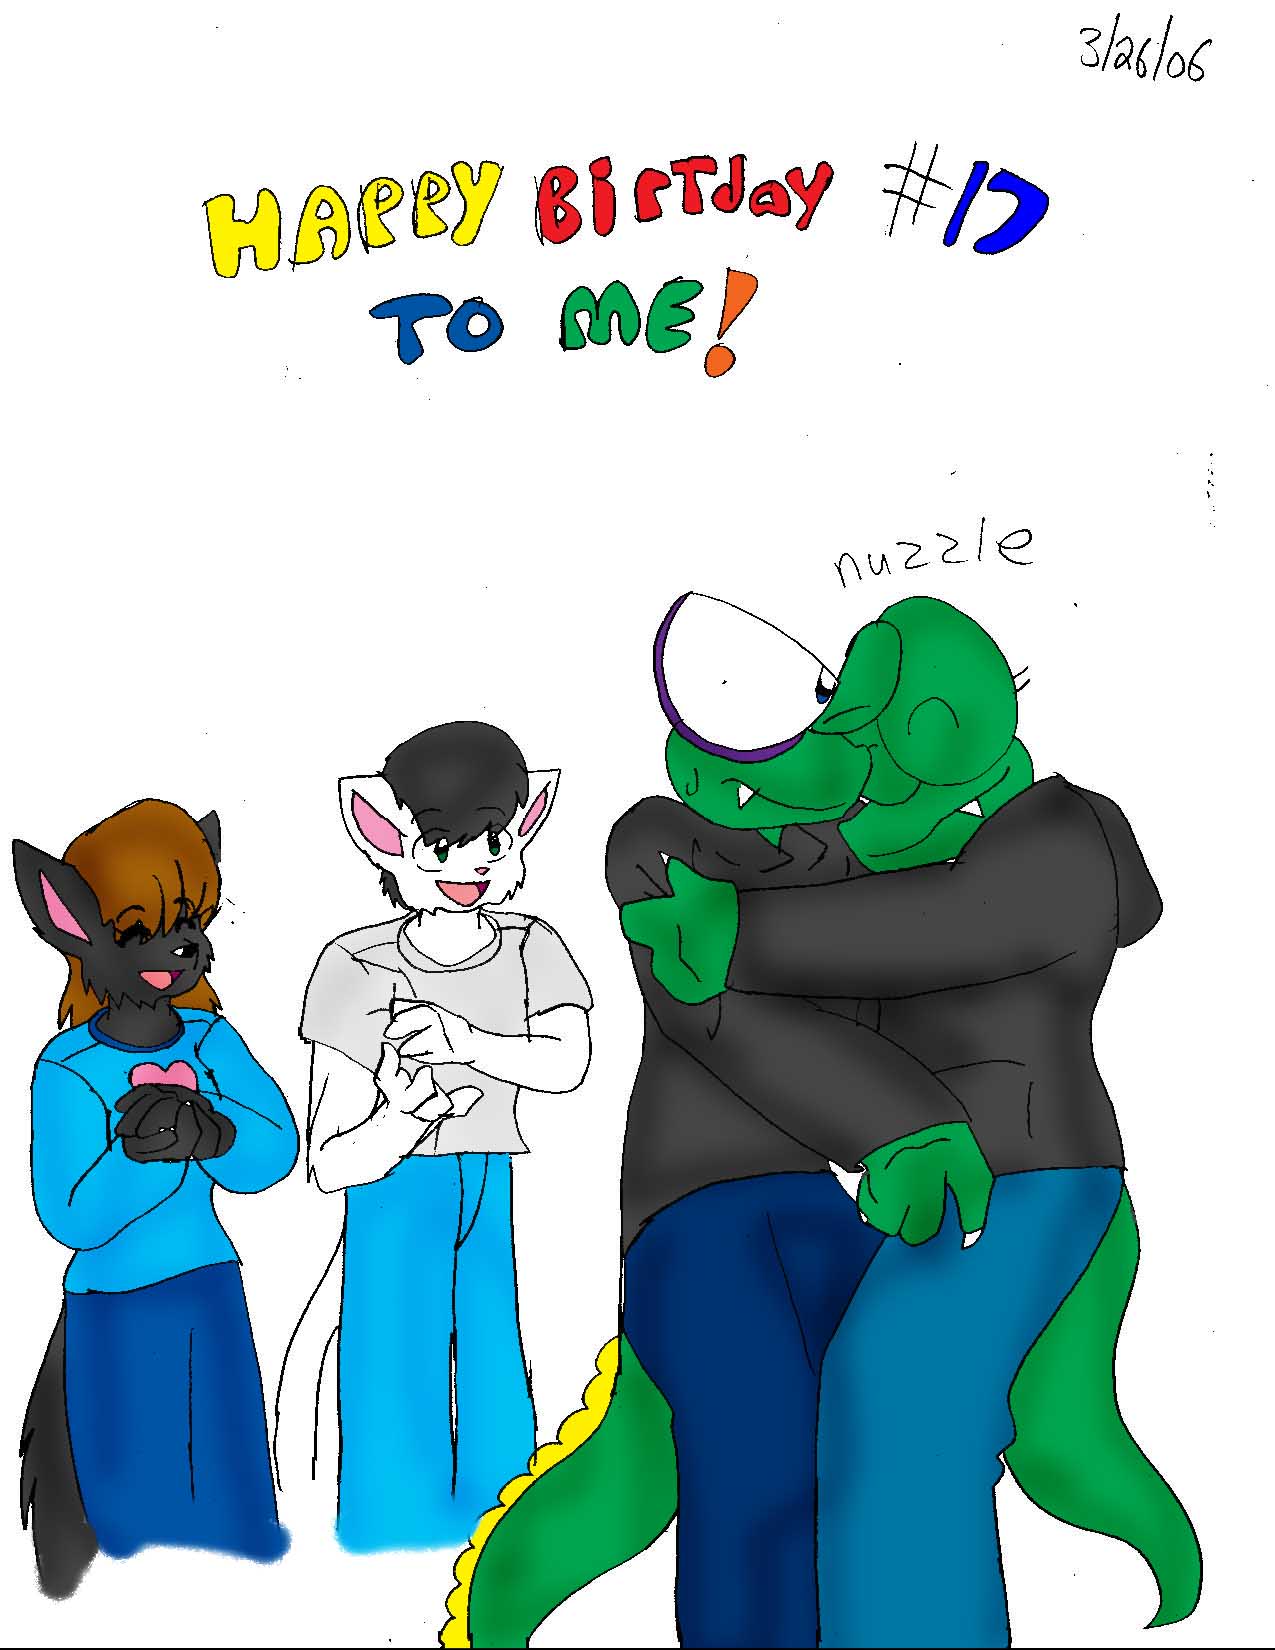 Happy Birthday to Me! by crocdragon89